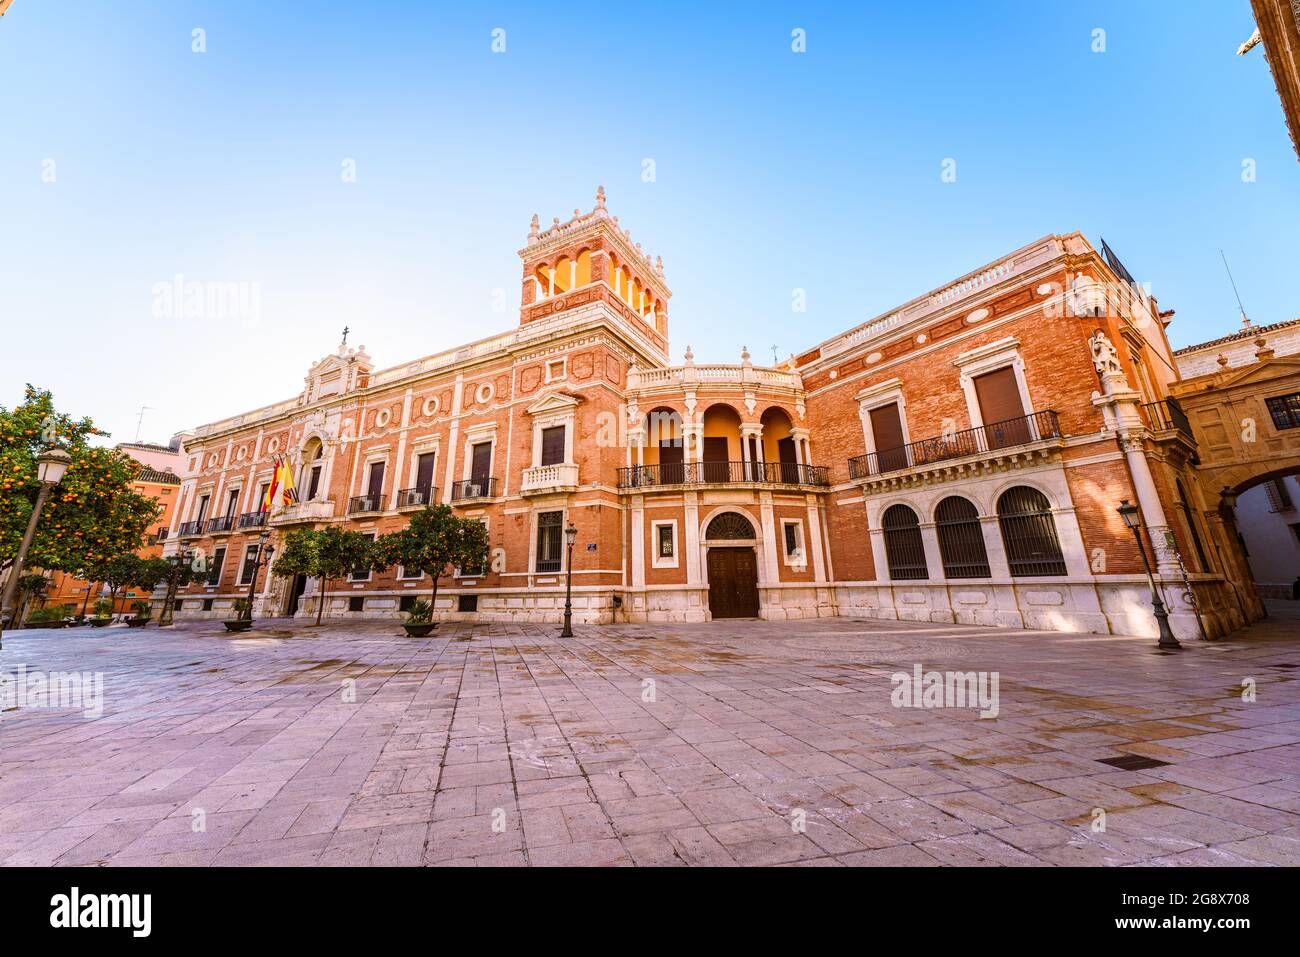 Valencia, Spain. Palace in the old town known as Cabildo de Valencia Stock Photo